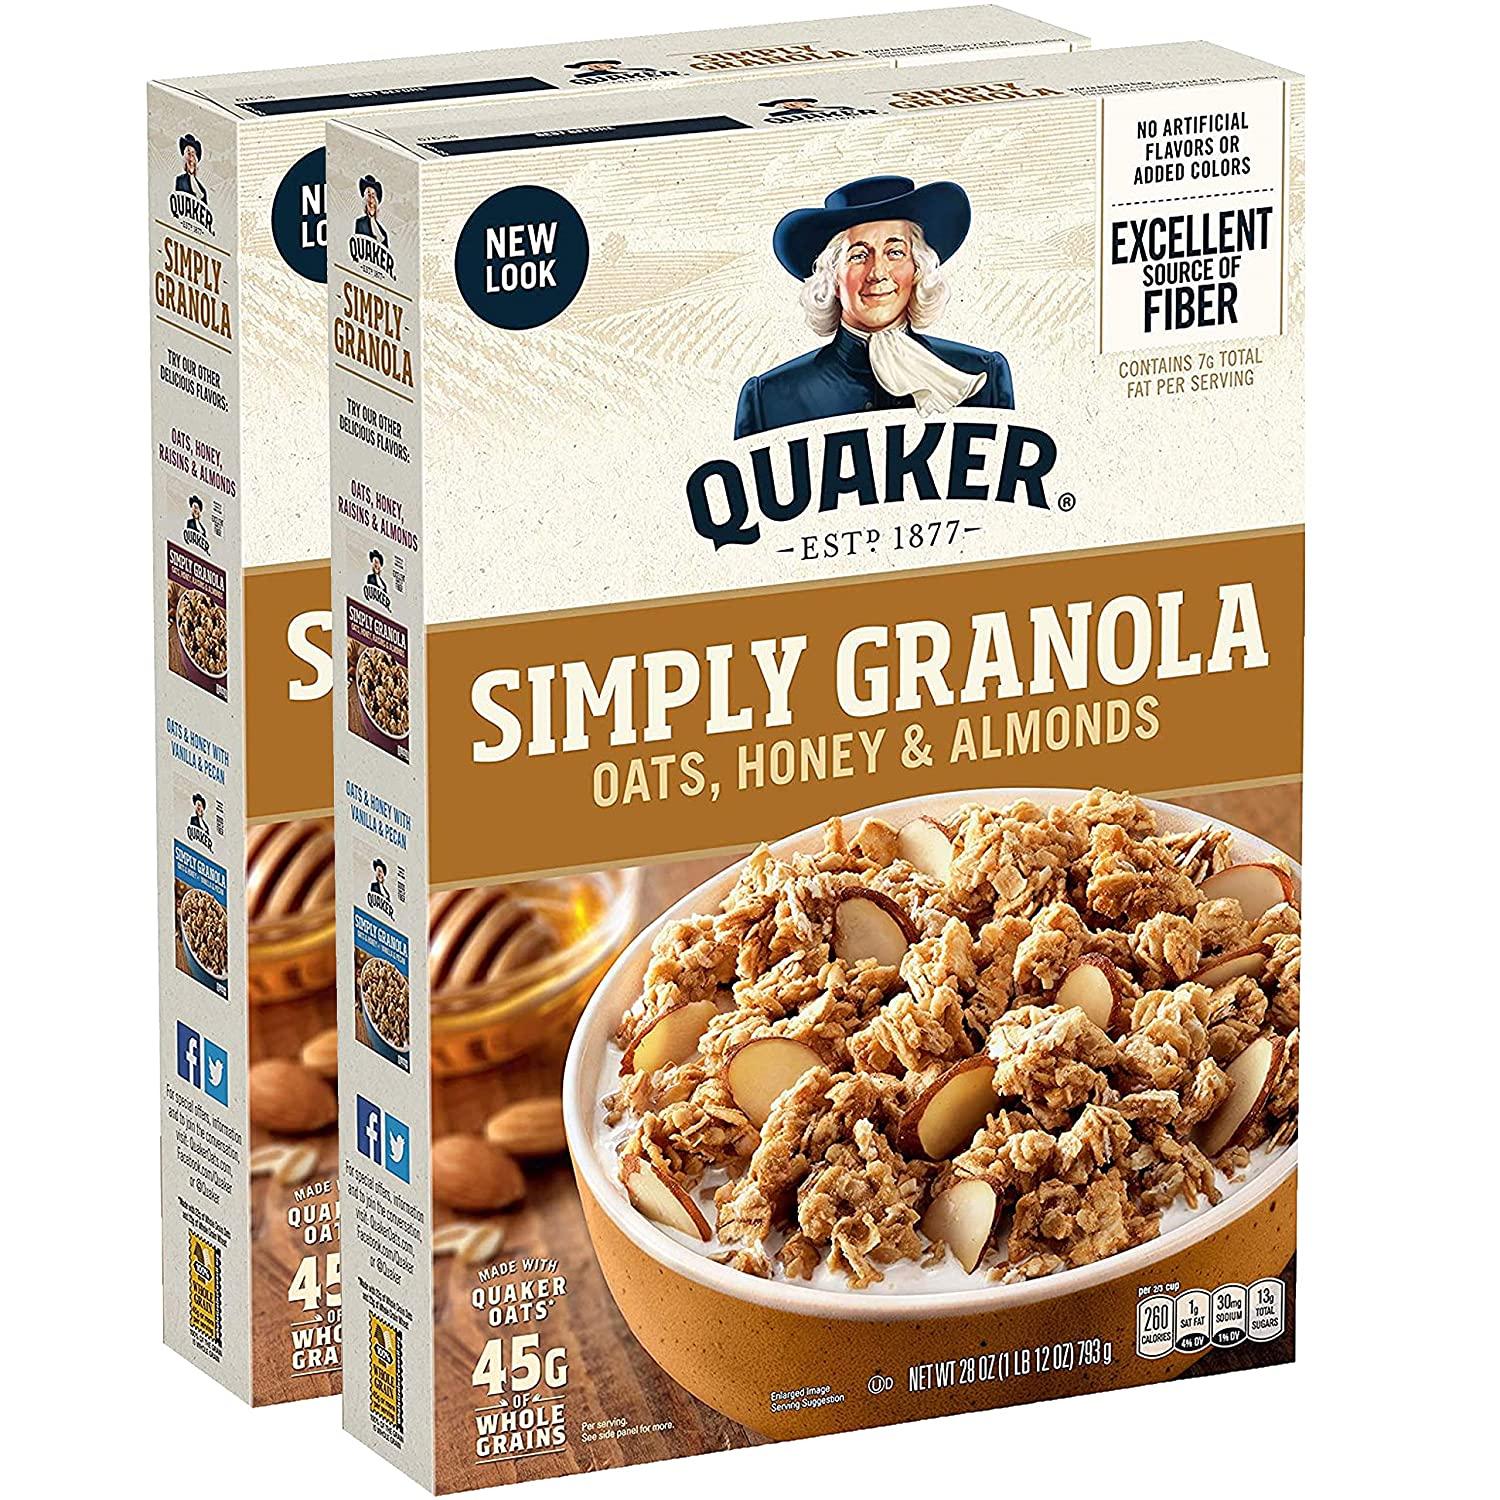 2 Quaker Simply Granola Oats for $6.13 Shipped